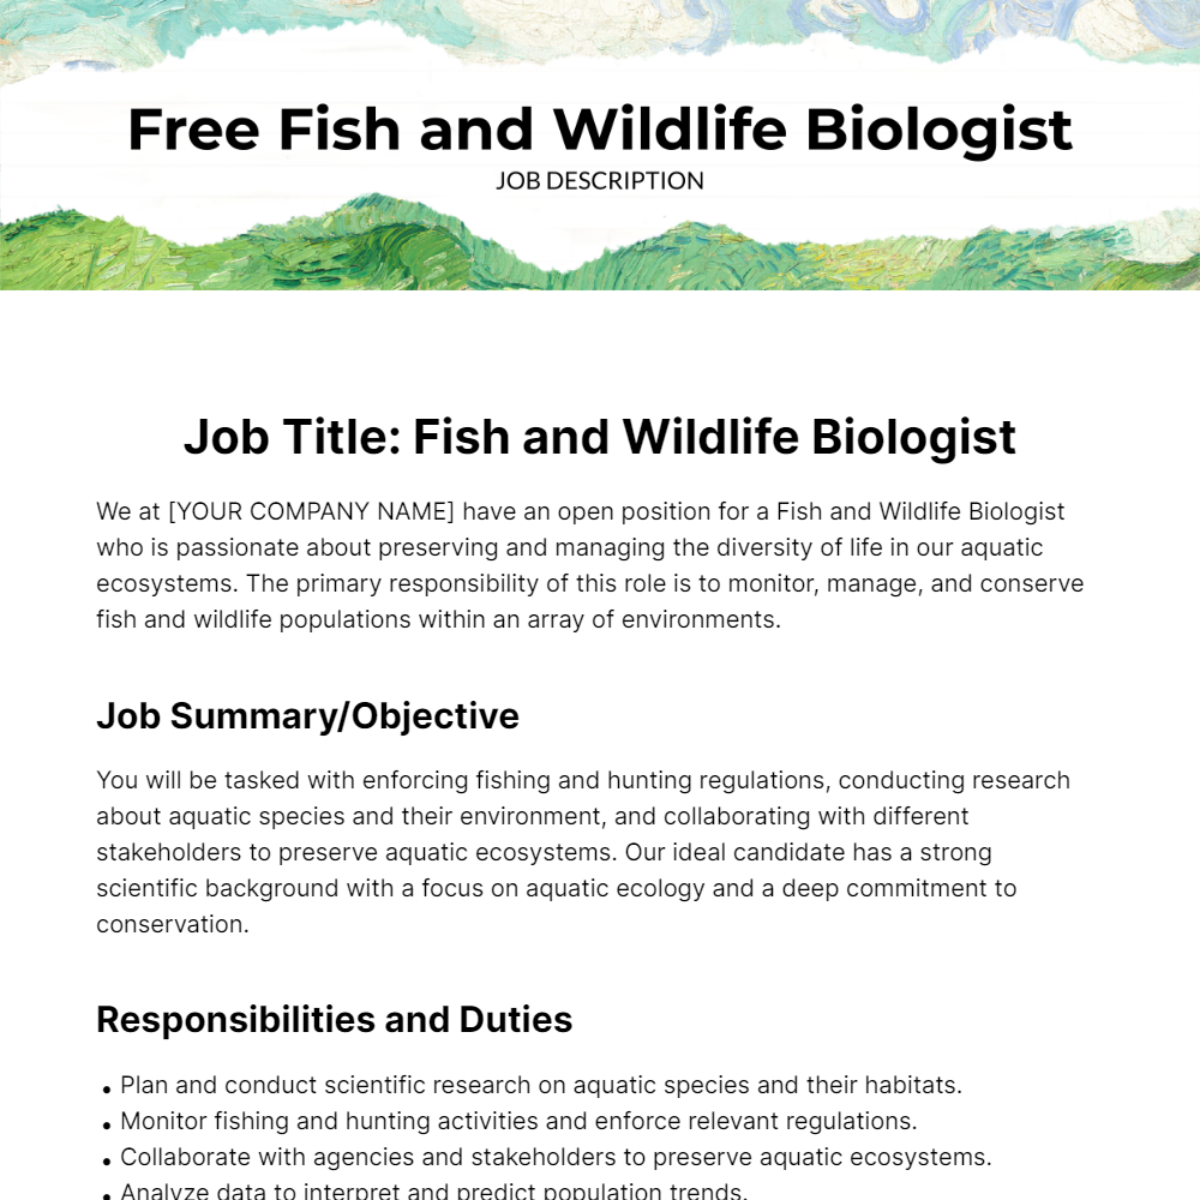 Free Fish and Wildlife Biologist Job Description Template